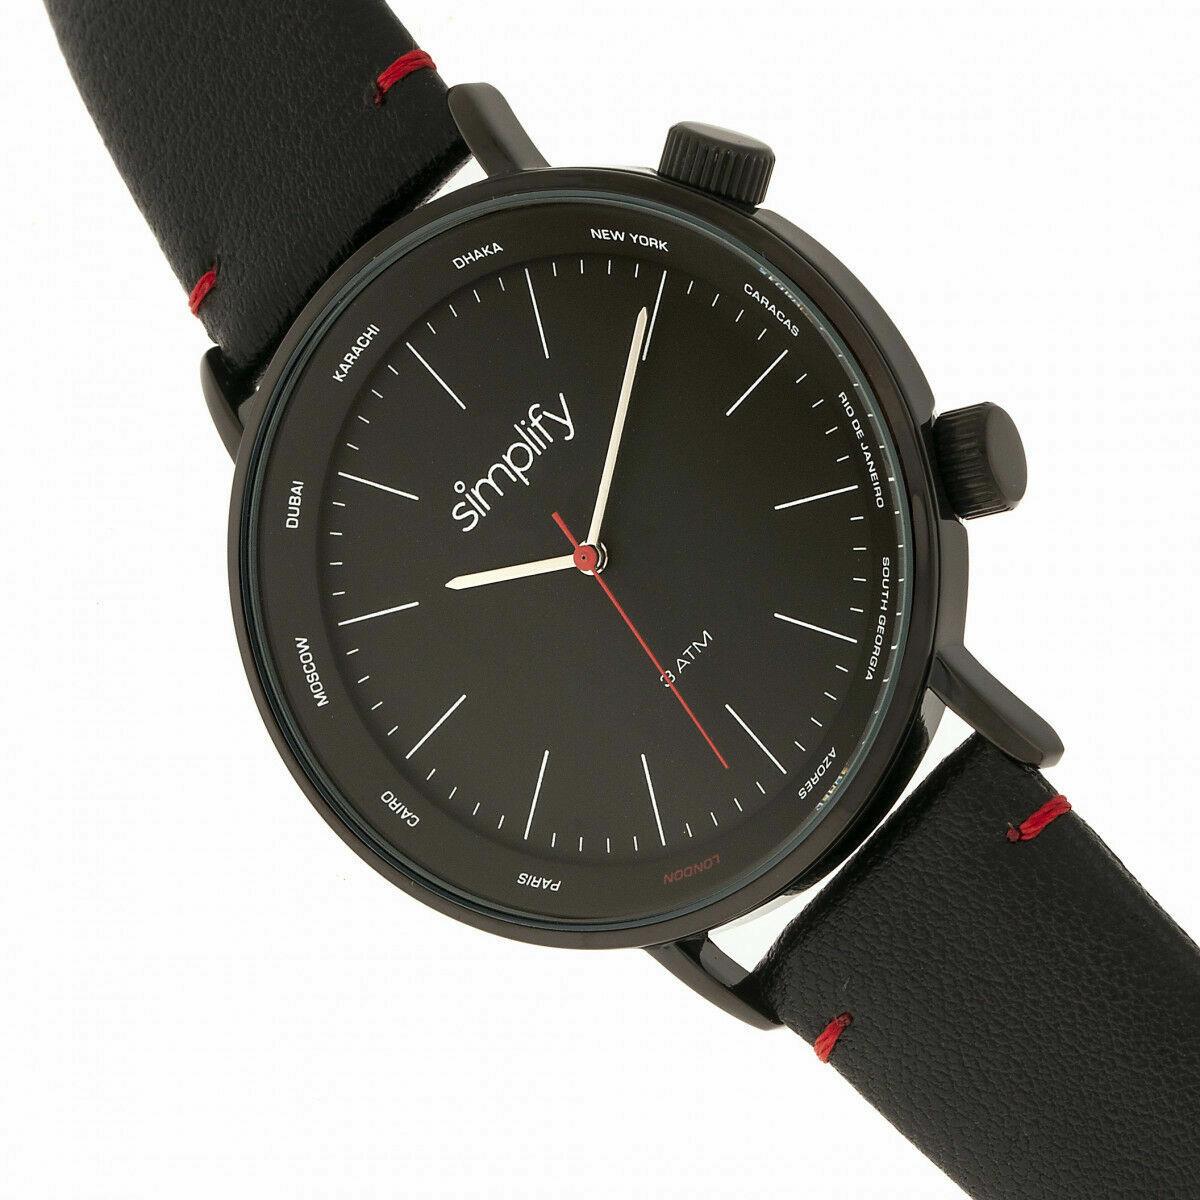 Simplifythe 3300 Black Dial Black Leather Watch SIM3306 - Dial: Black, Band: Black